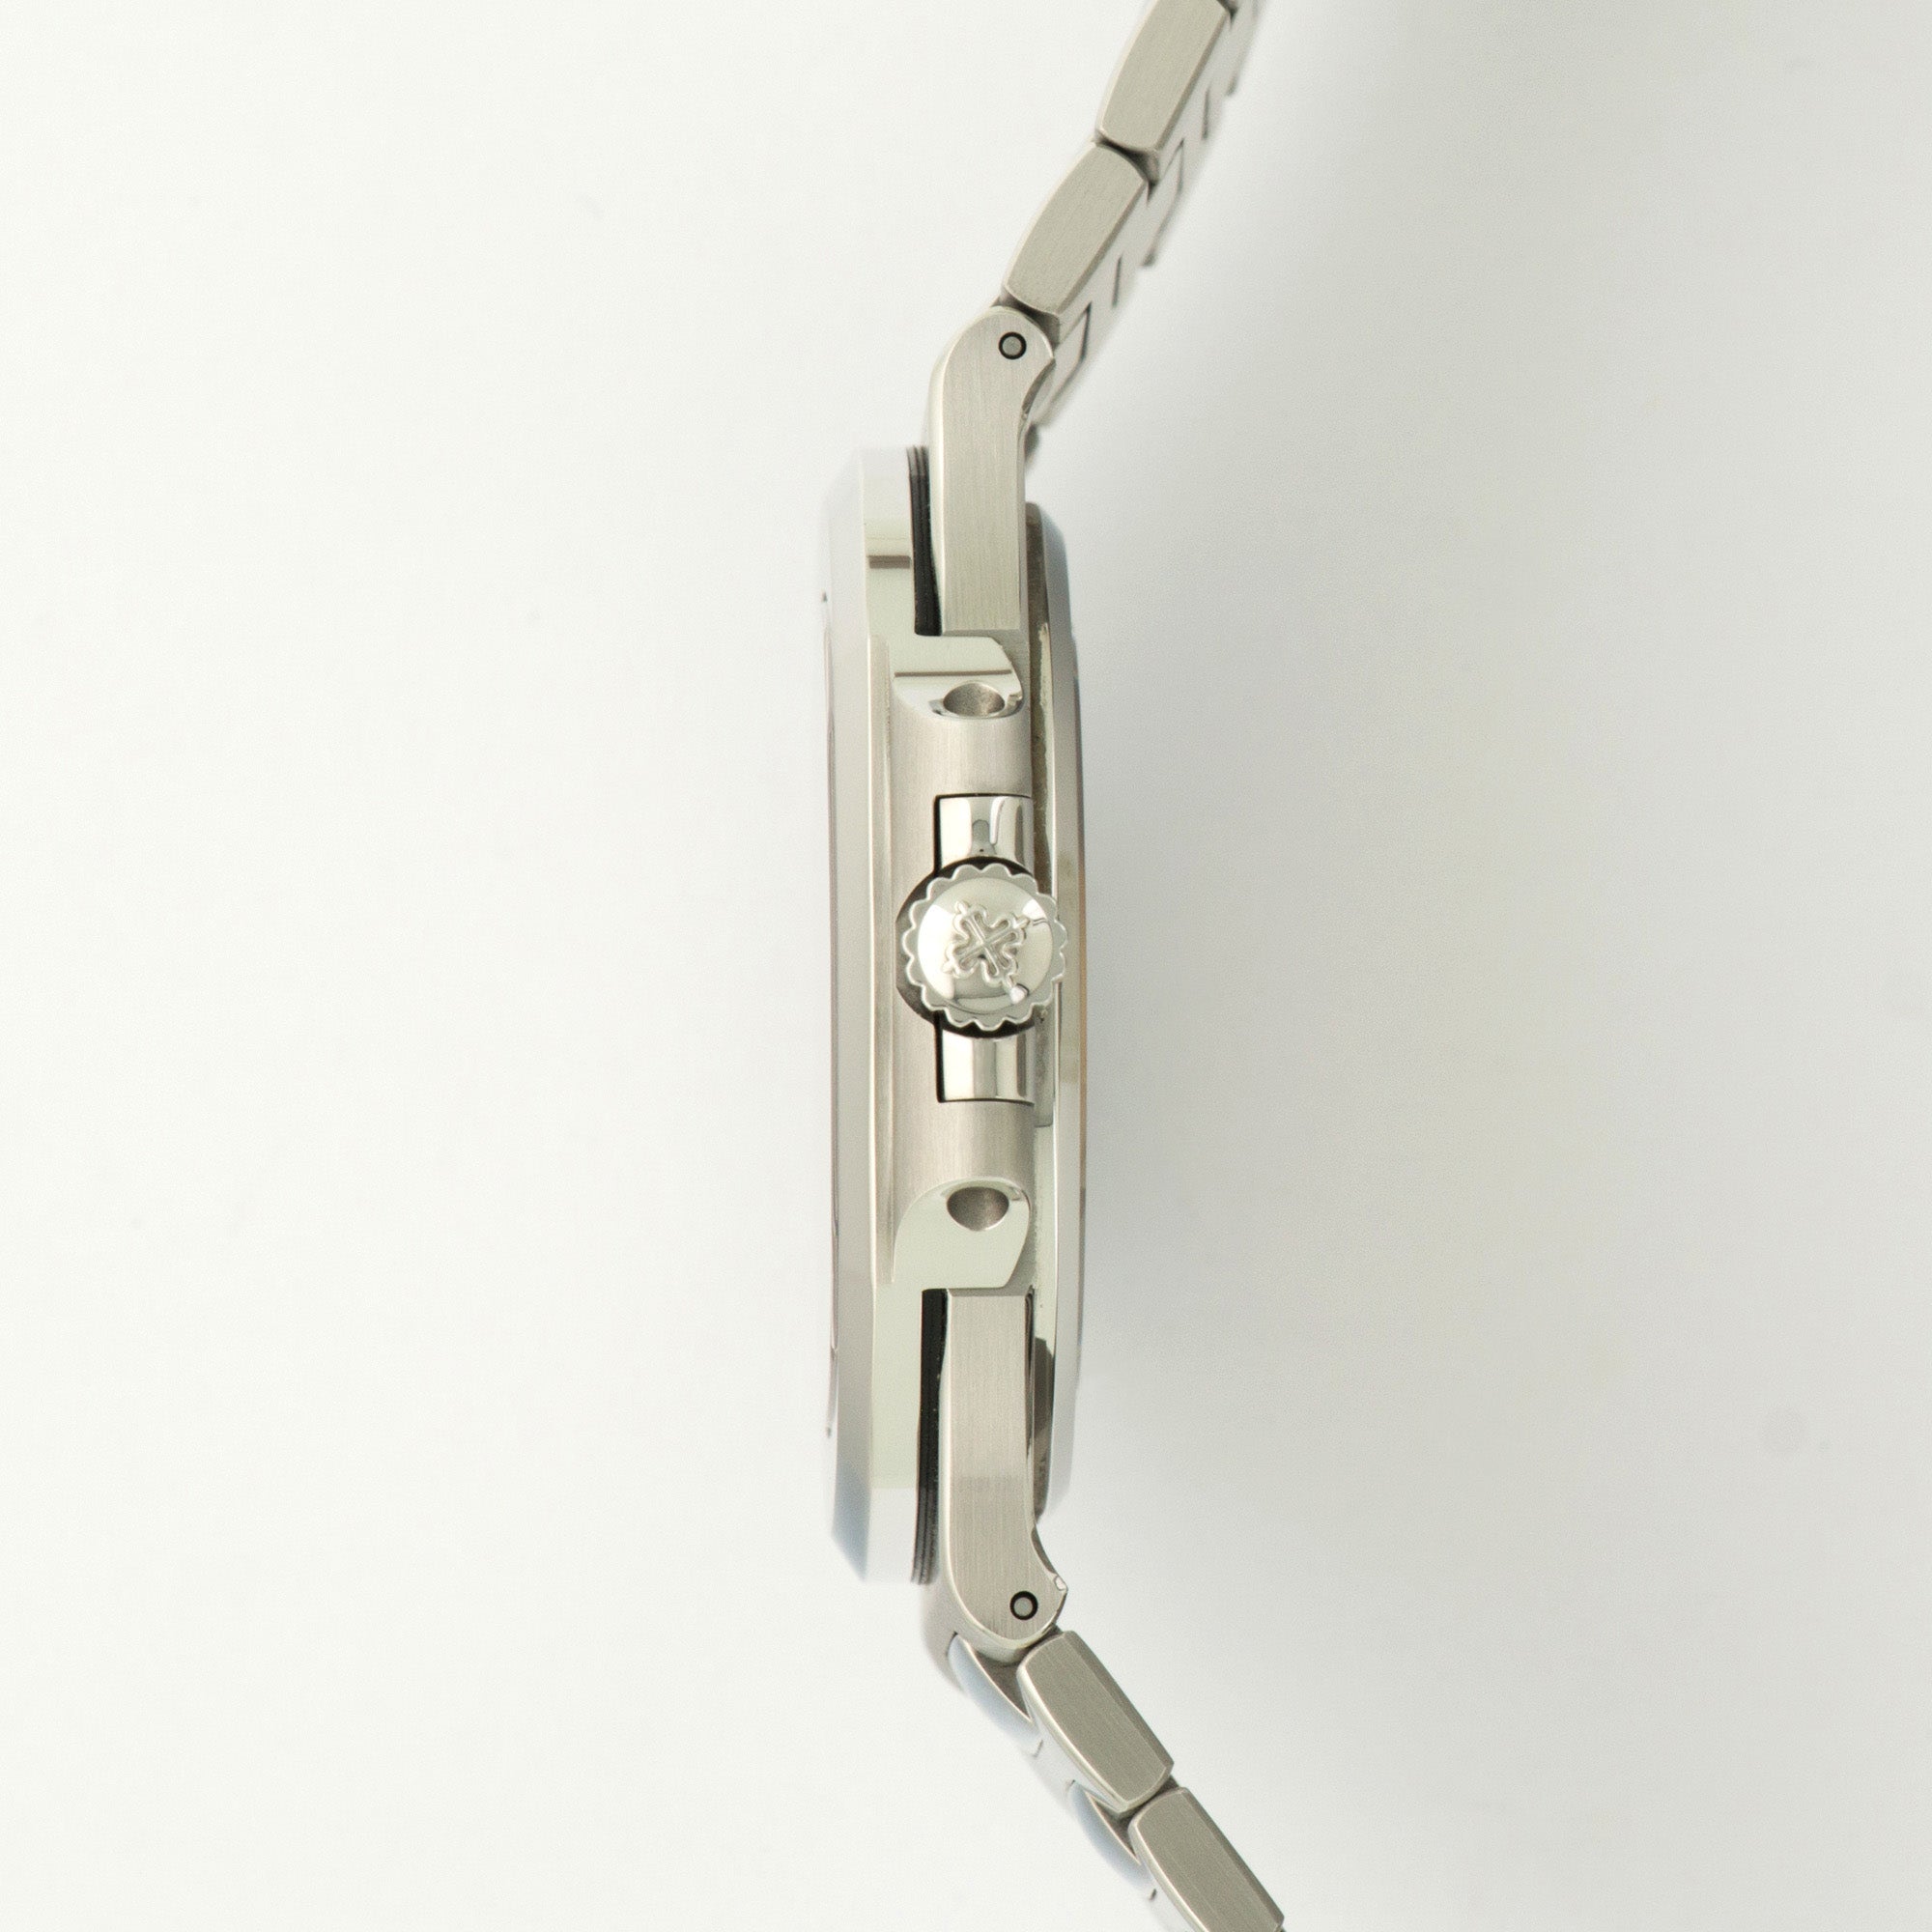 Patek Philippe - Patek Philippe Steel Nautilus Watch Ref. 5711 - The Keystone Watches